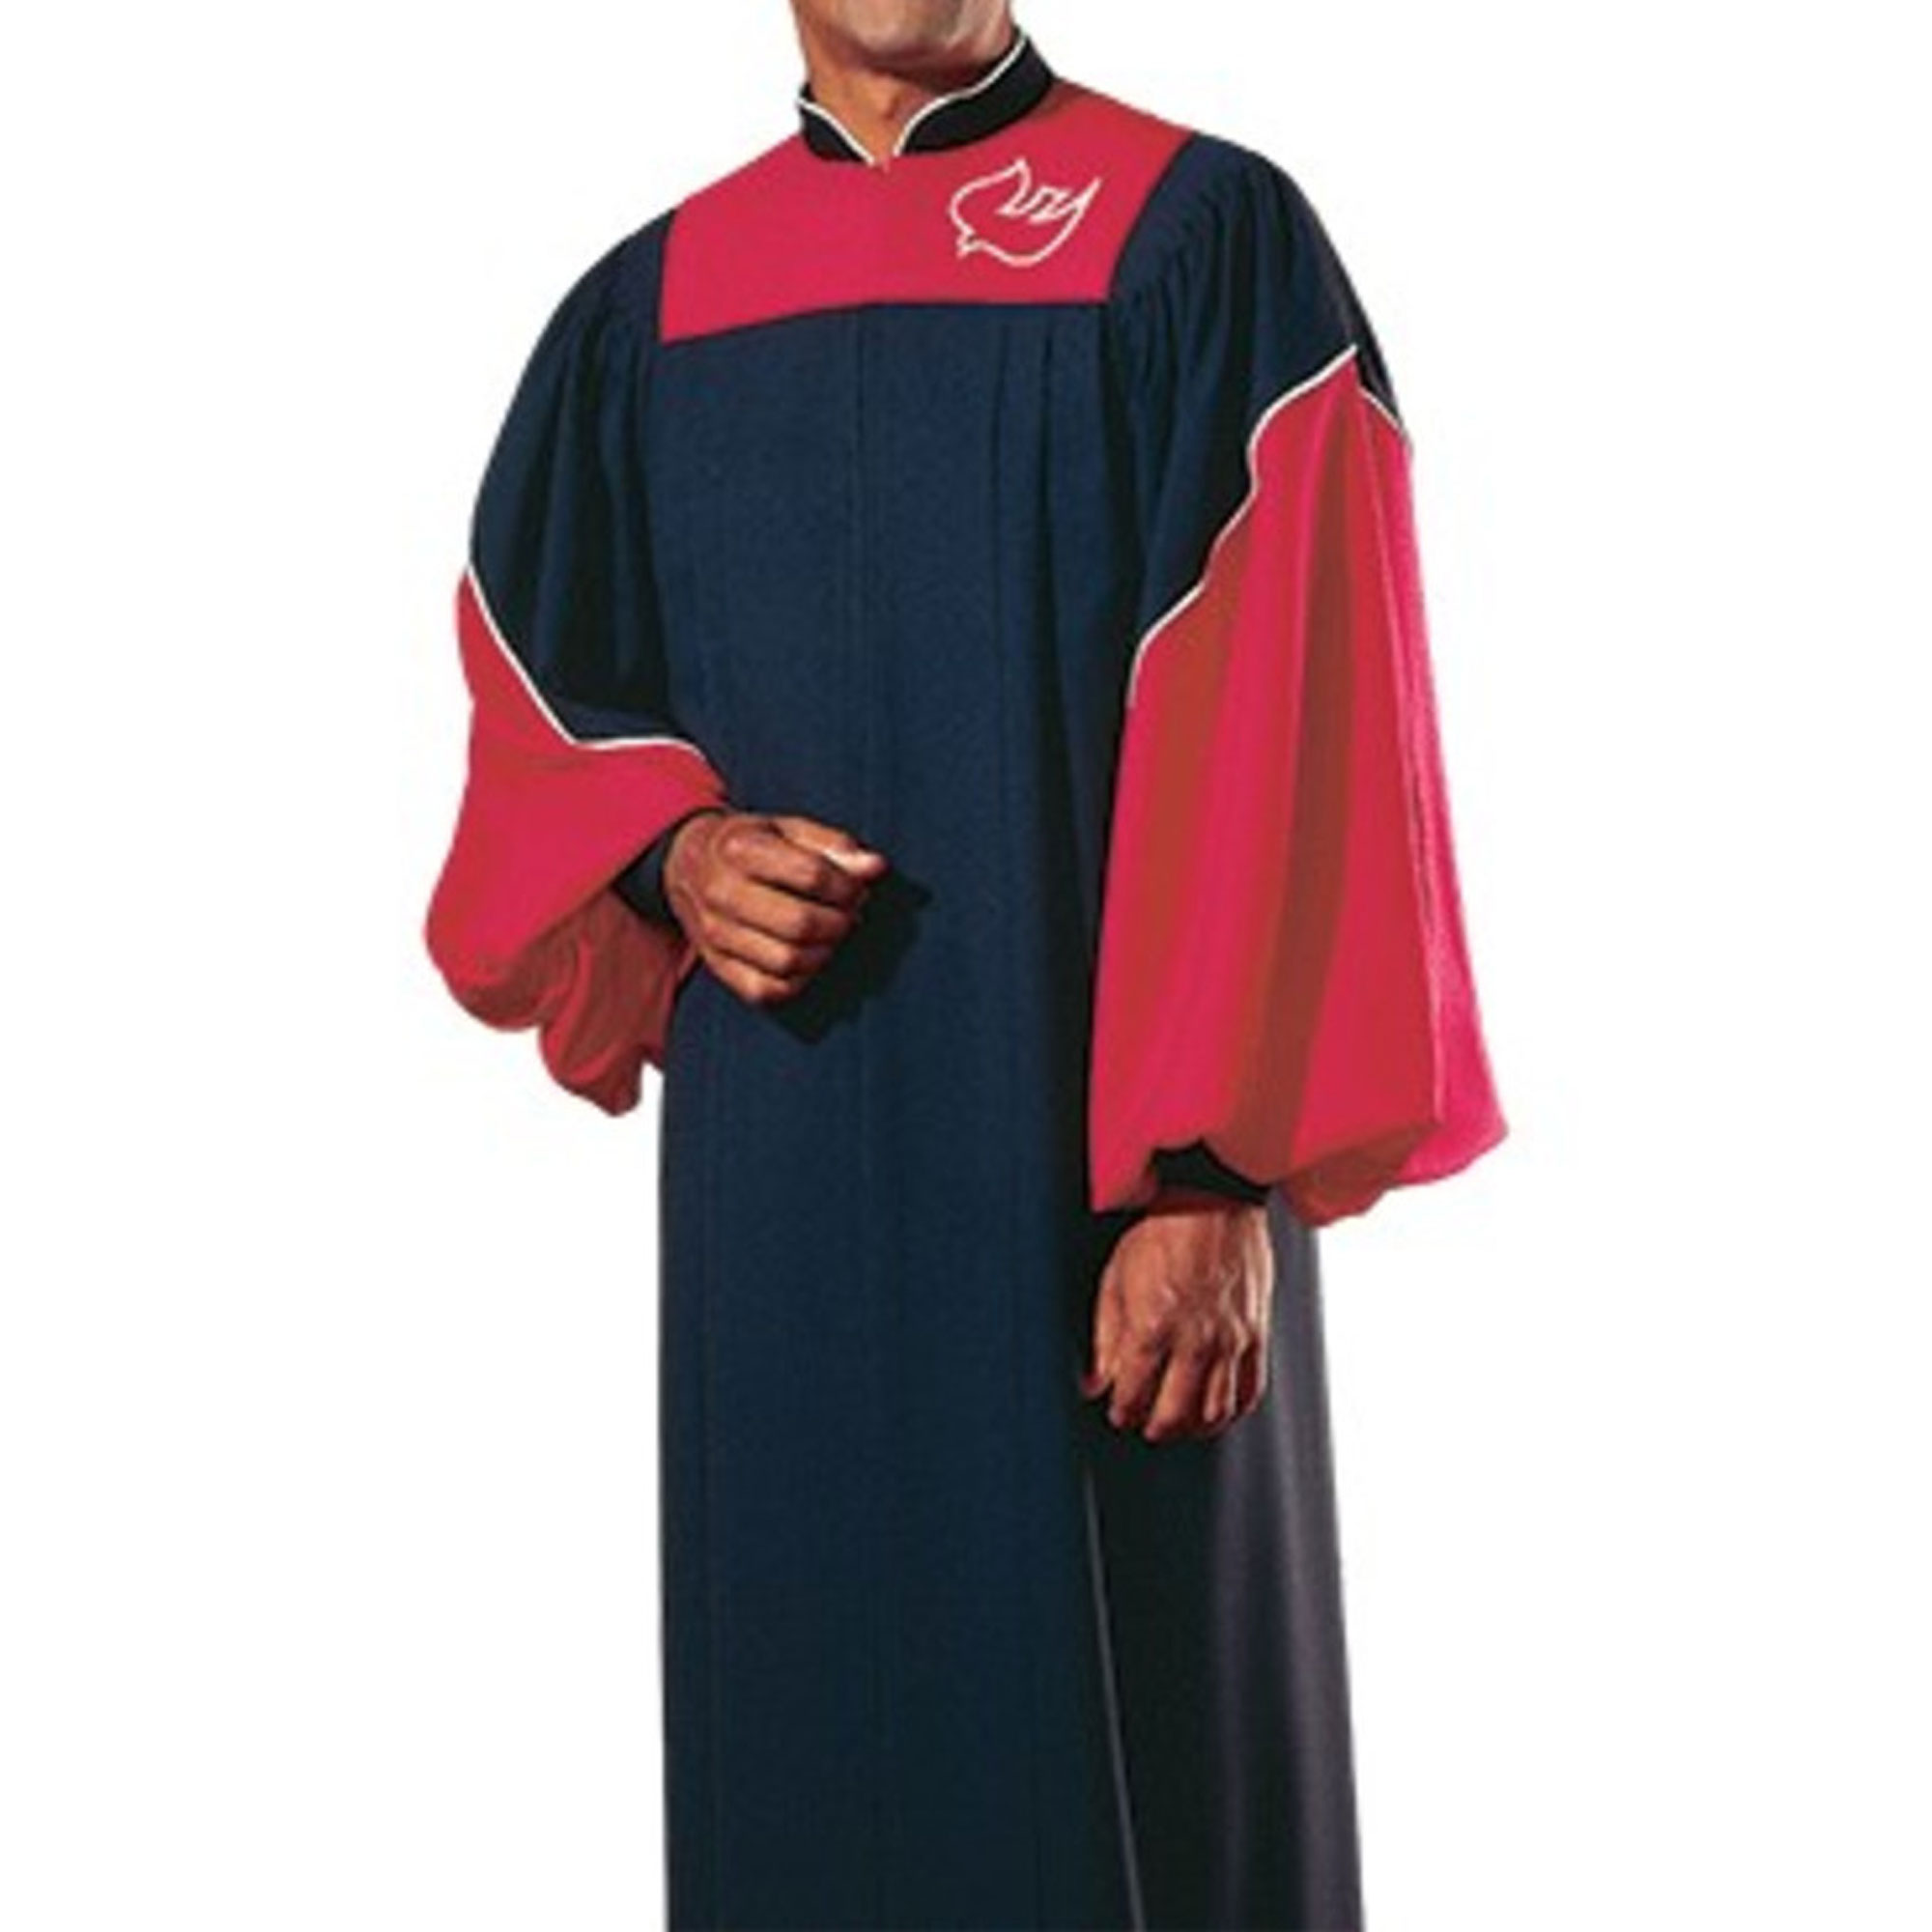 Choir Robe Epiphany - Black Christian robe